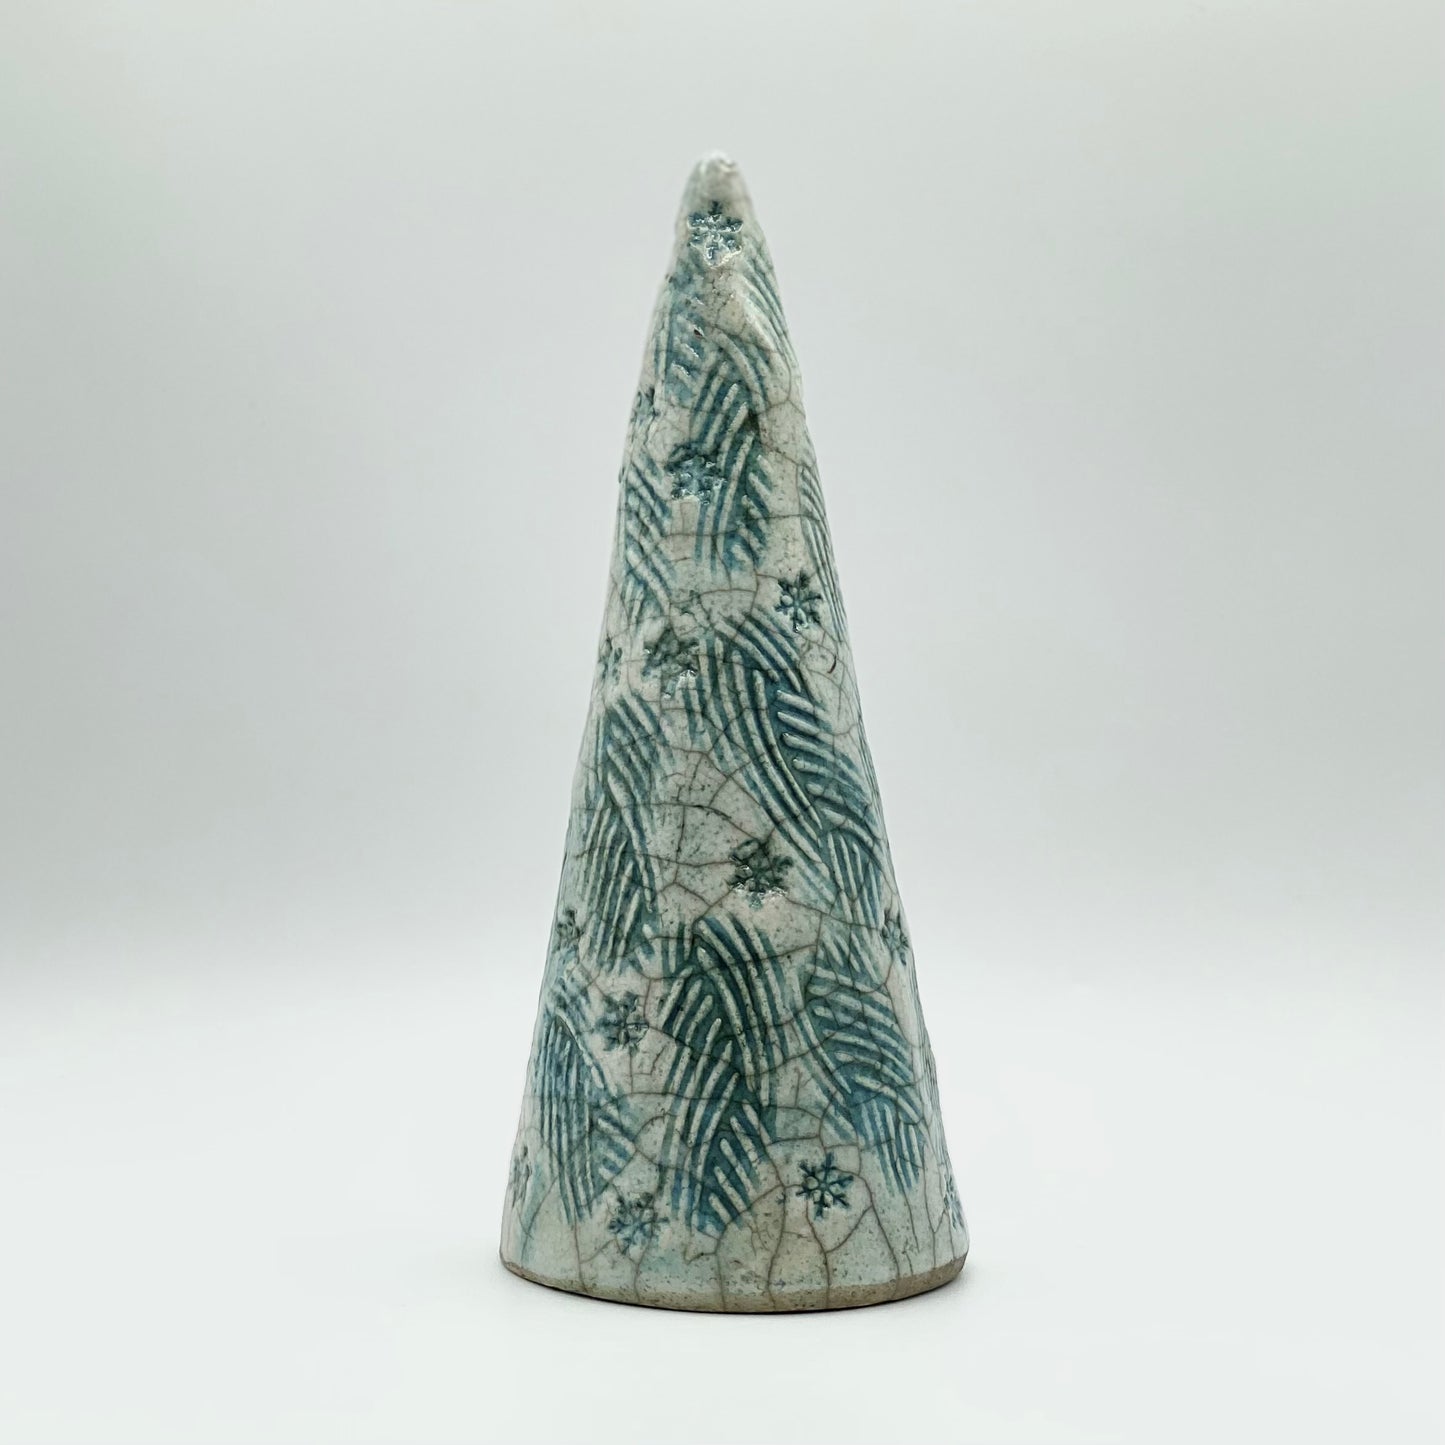 Raku Christmas Tree by Tim Isaac Pottery